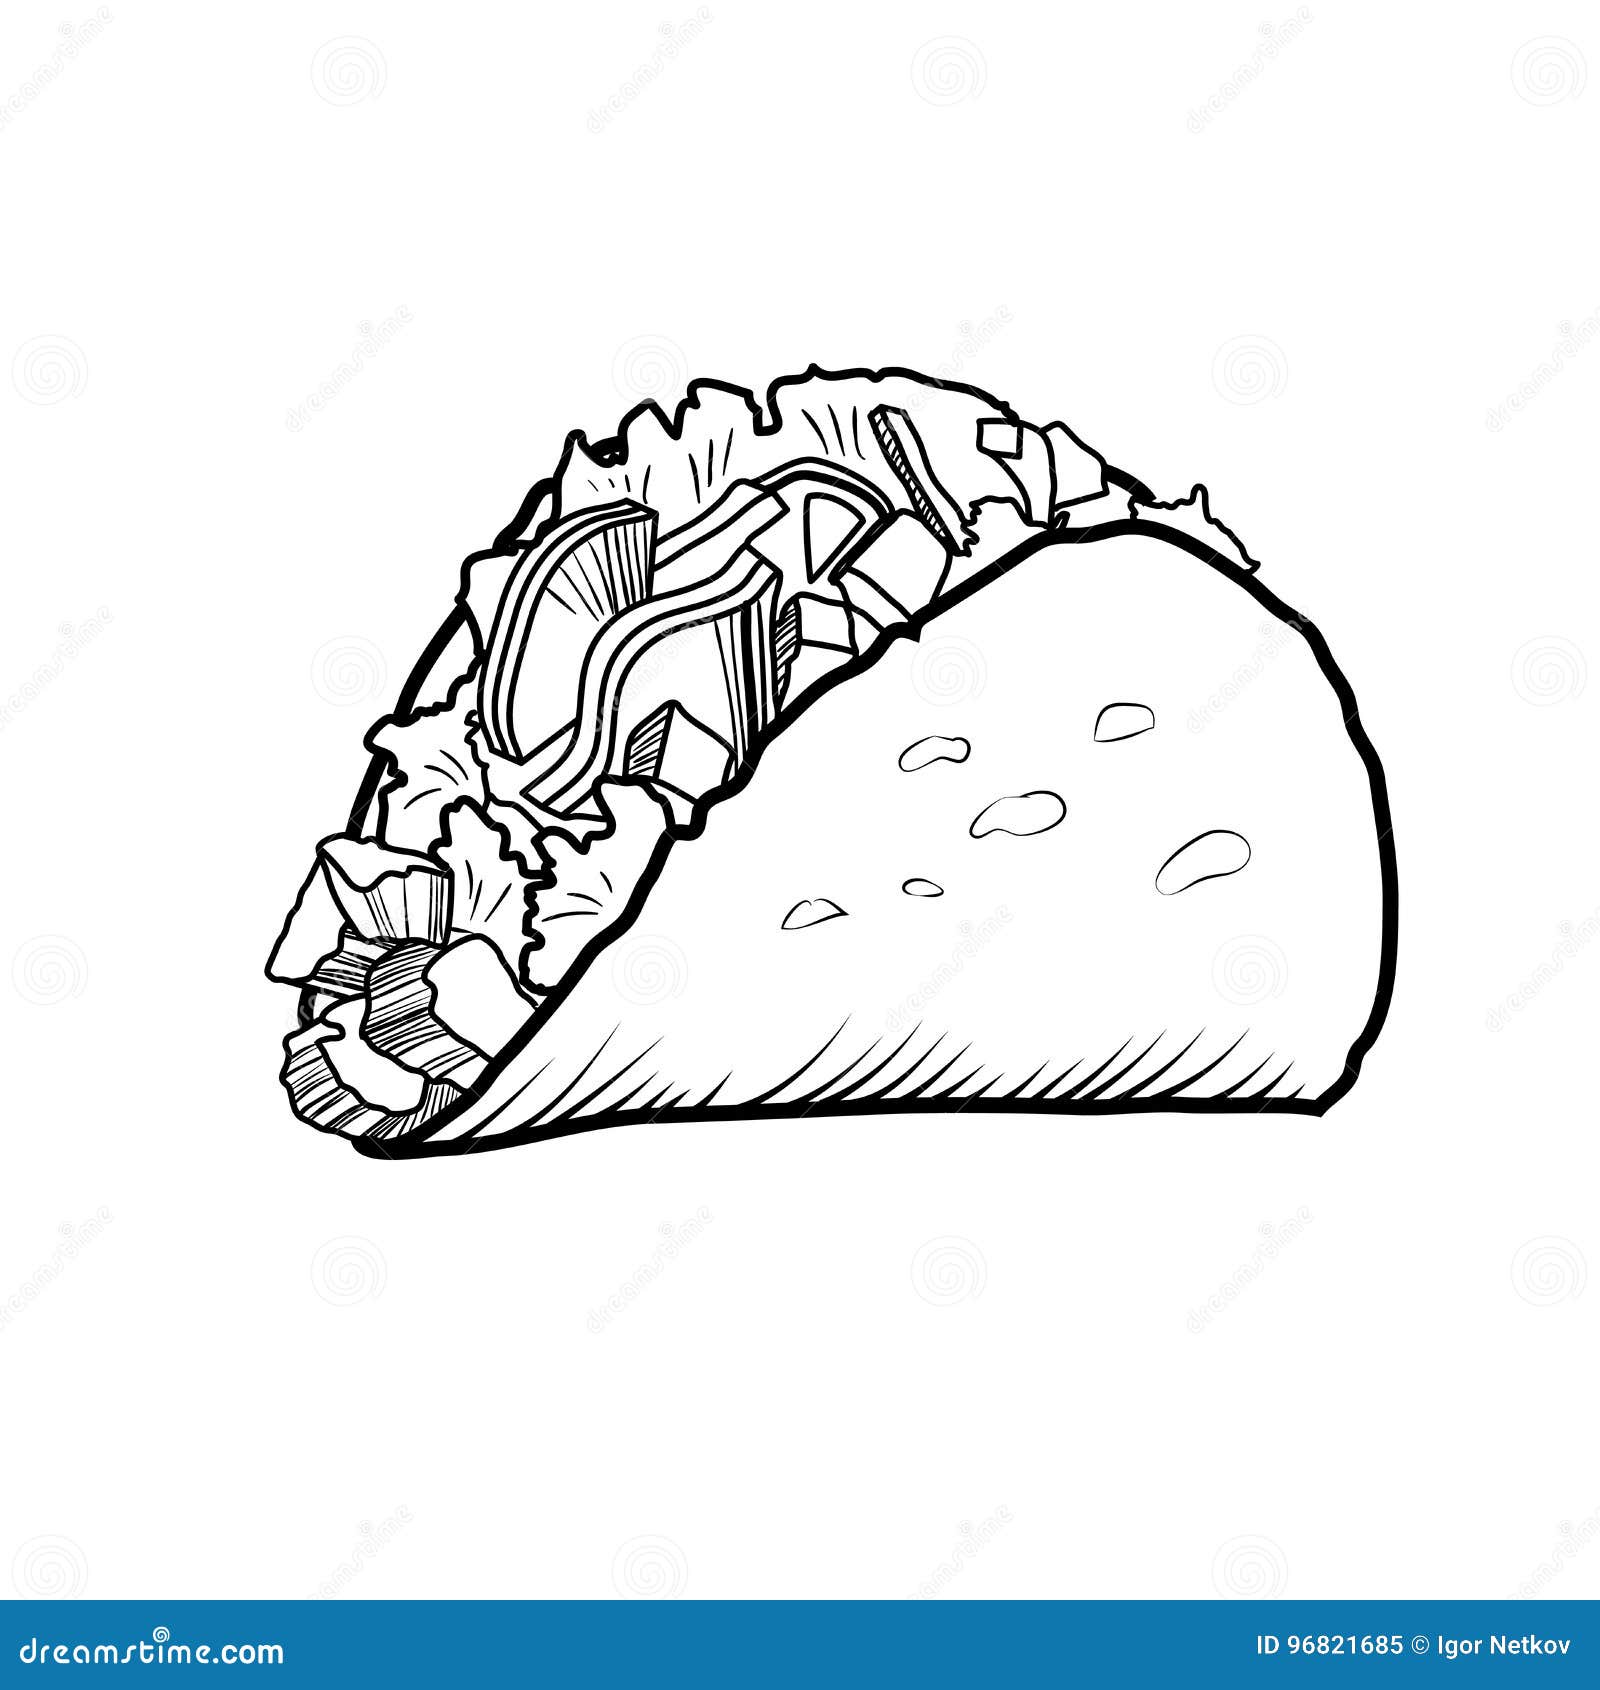 Taco Drawing Images  Free Download on Freepik